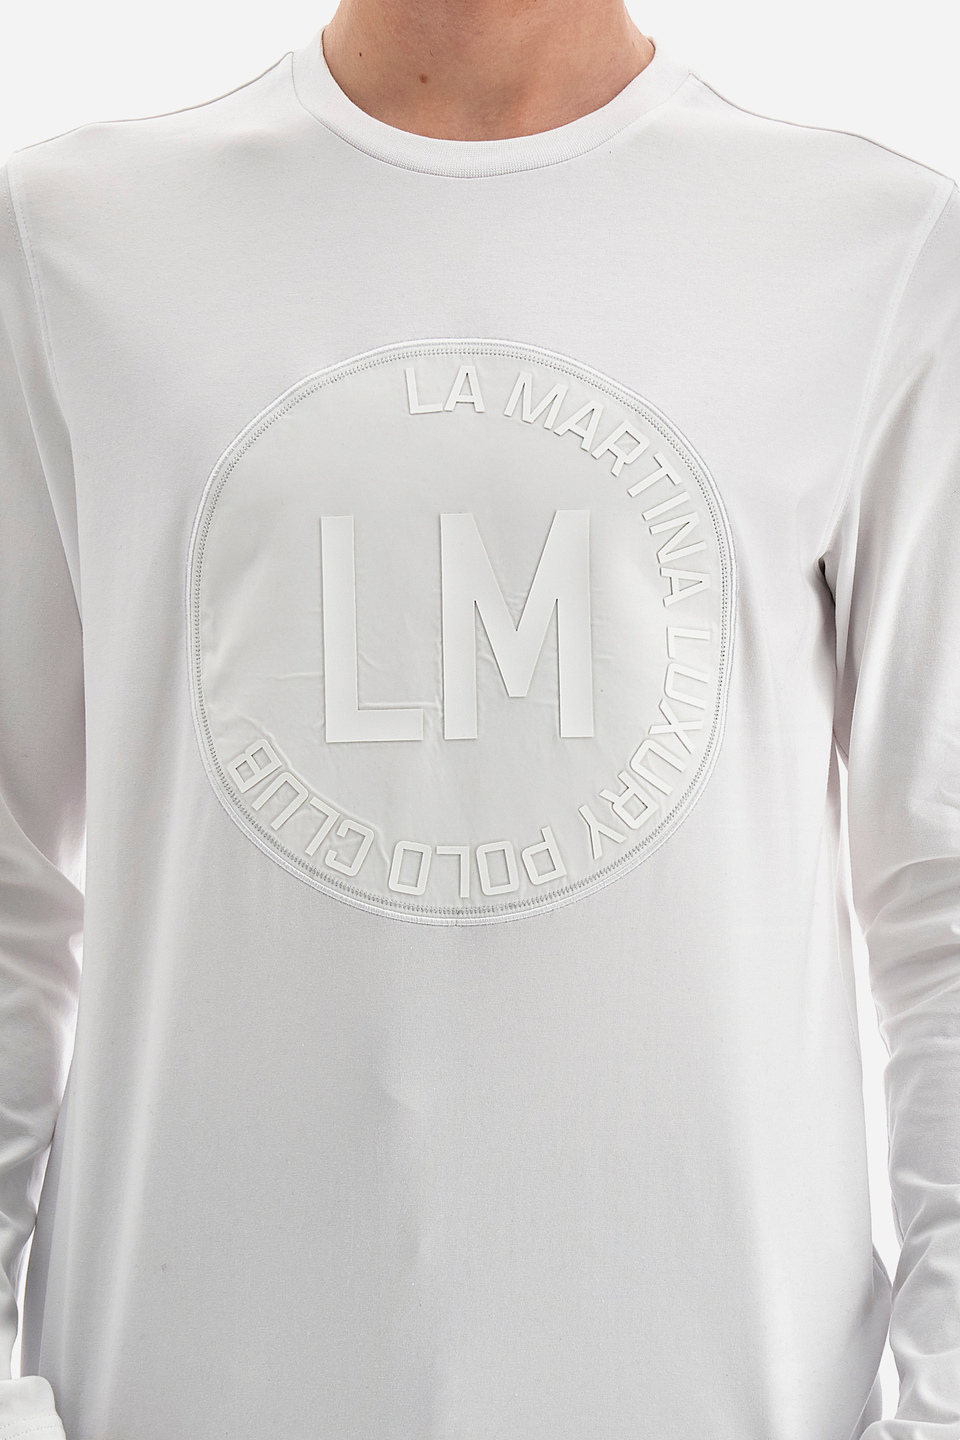 Herren -T -Shirt regular fit - Wills | La Martina - Official Online Shop